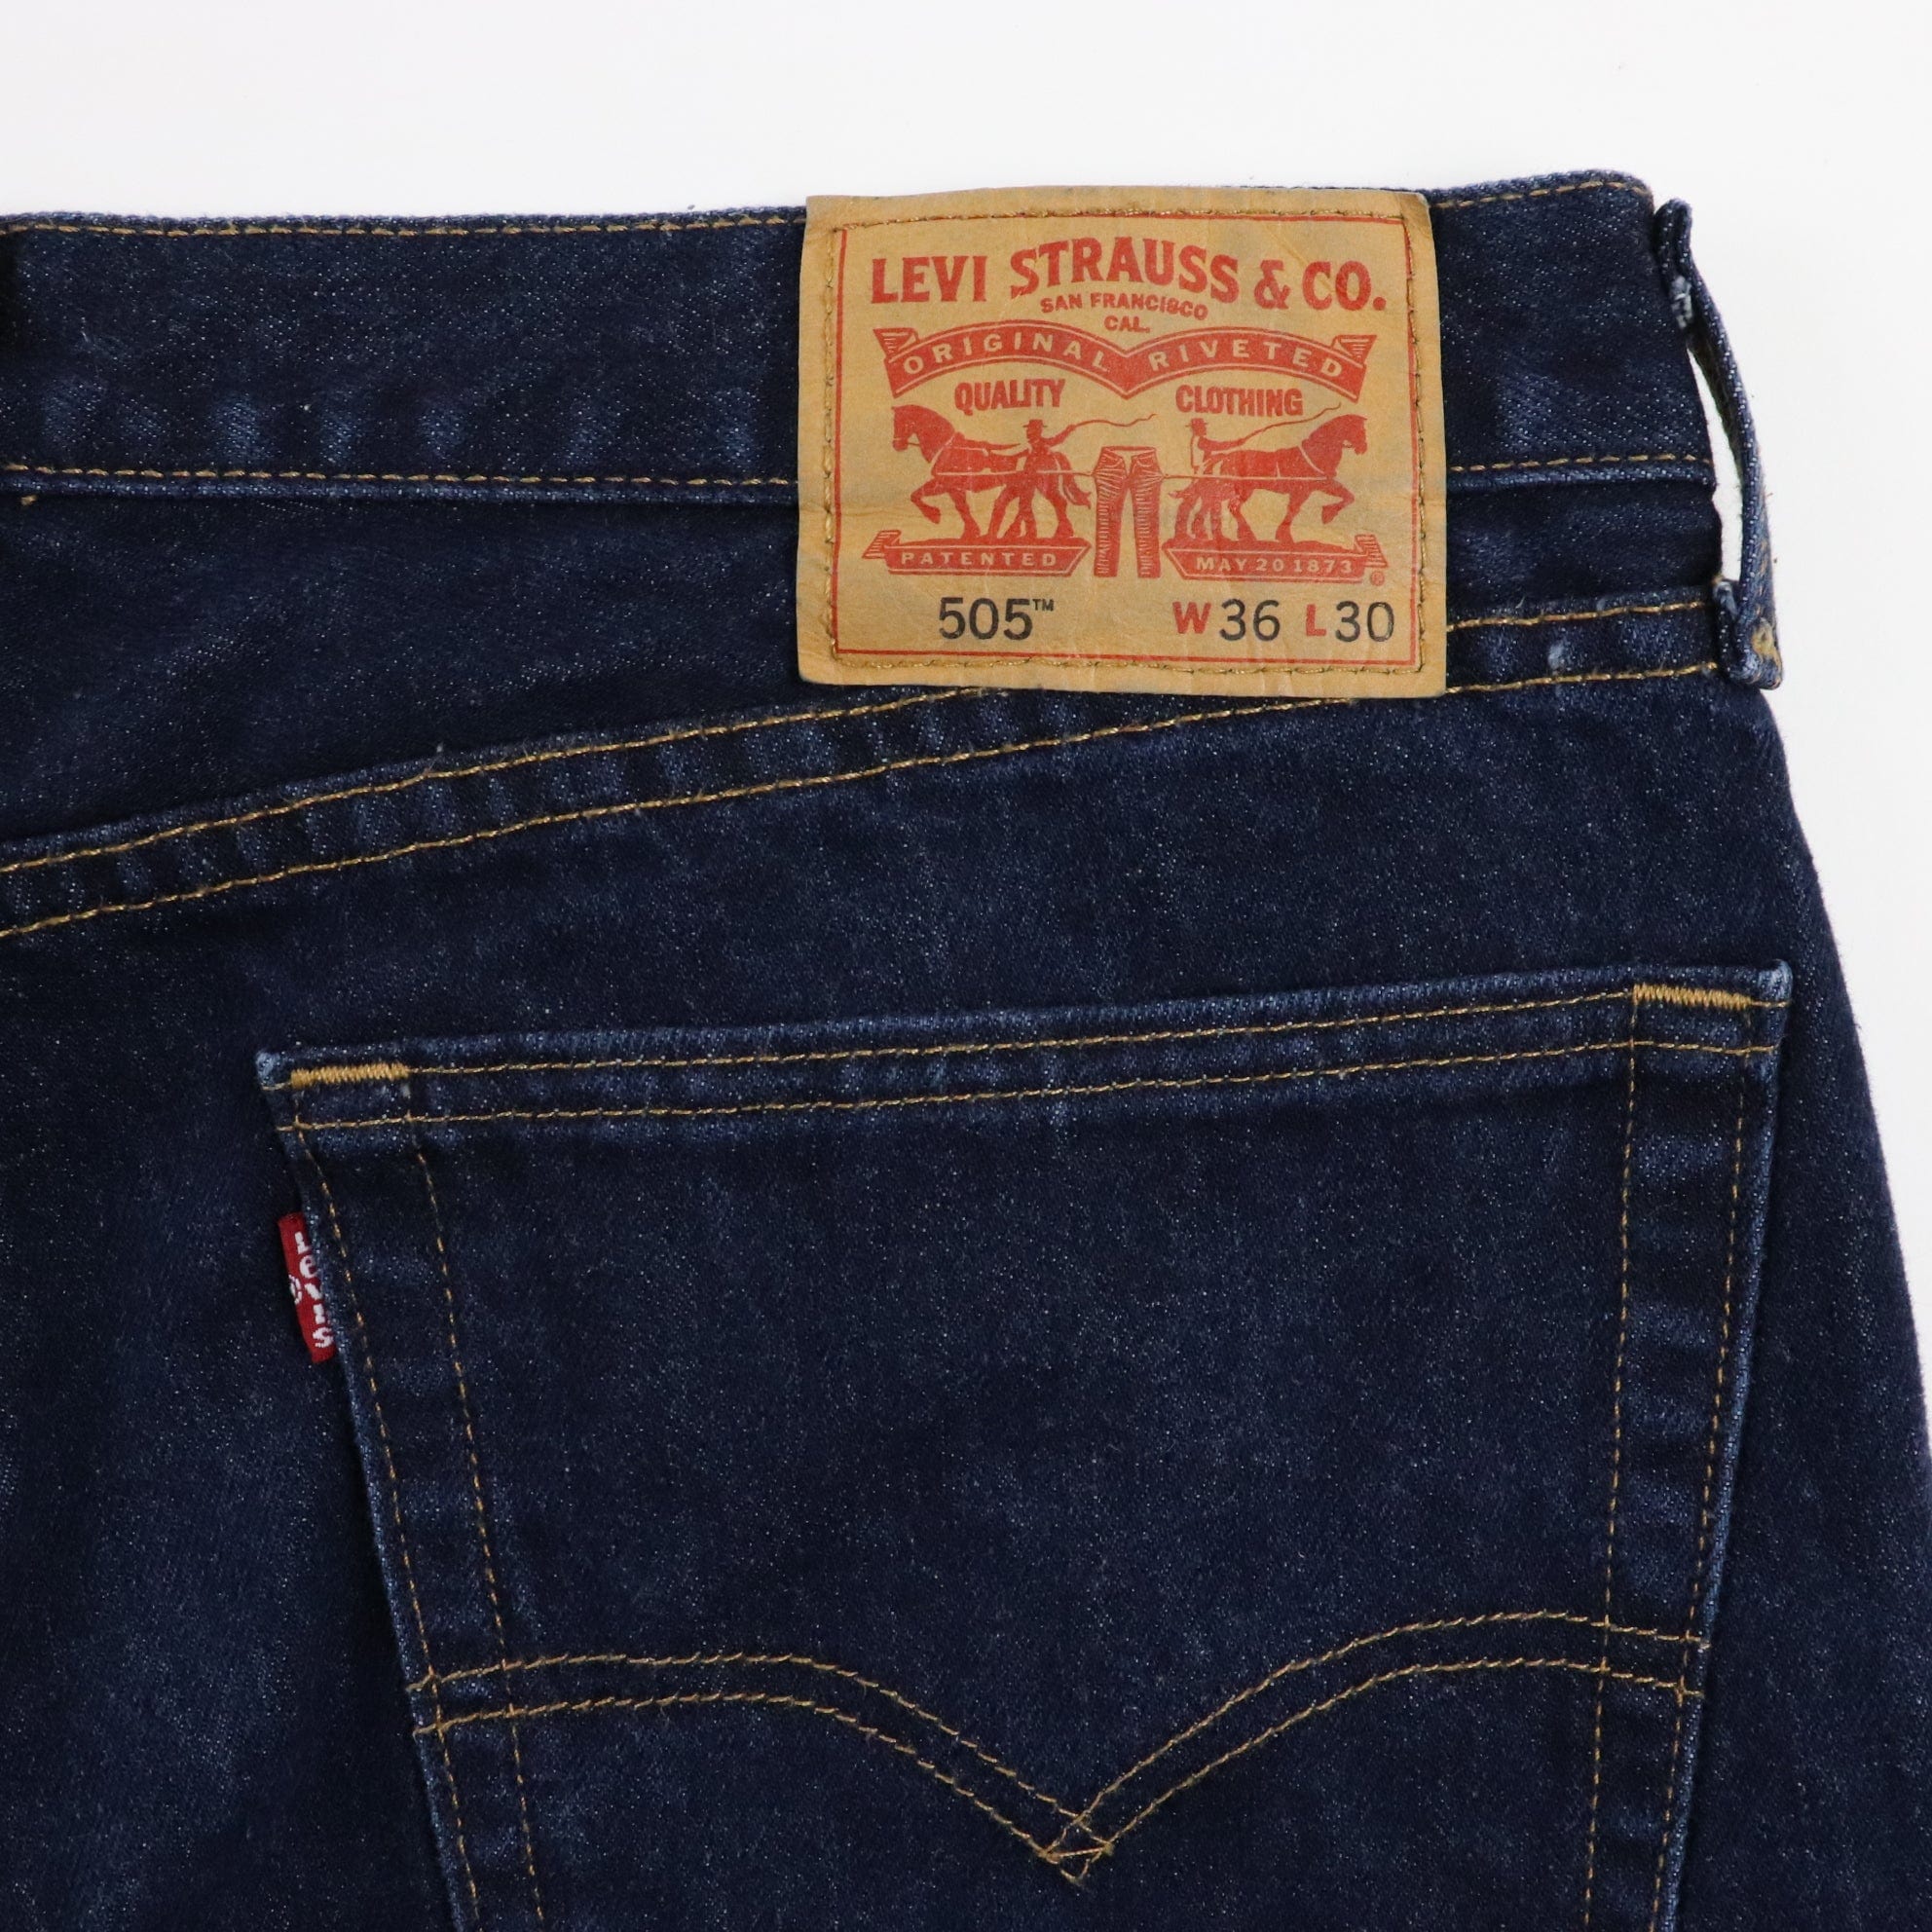 Levi's 505 Denim Jeans Size 36 x 30